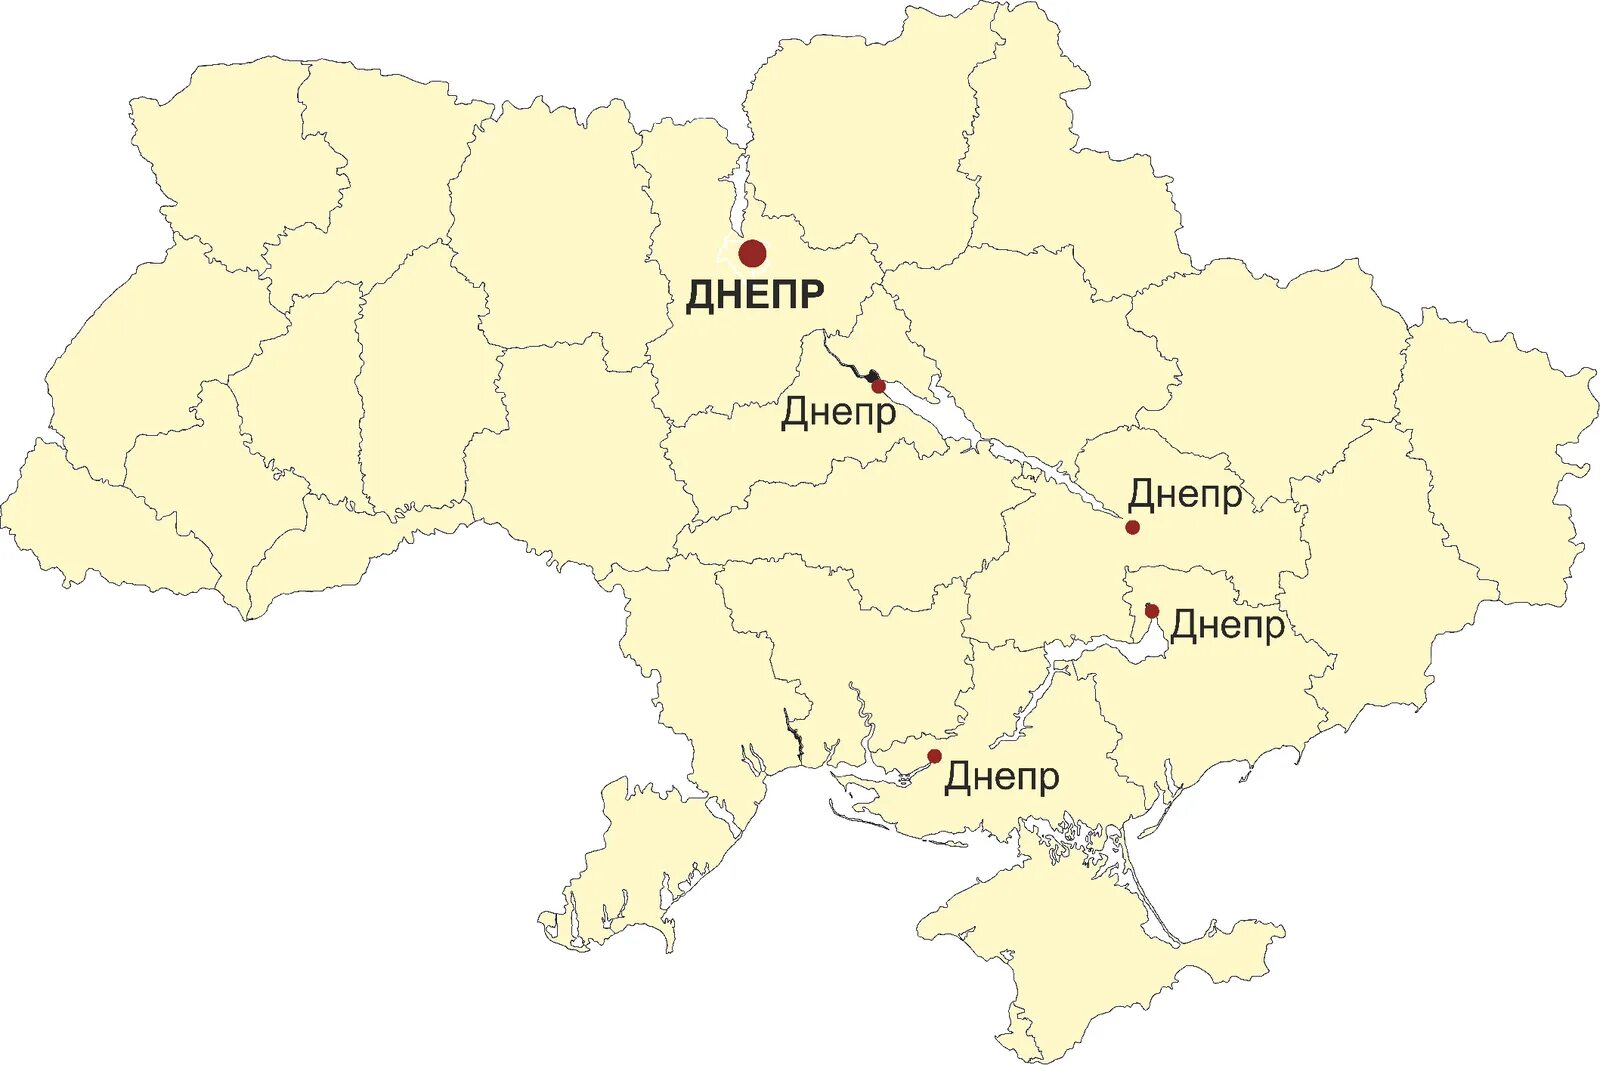 Город Днепр на карте Украины. Река Днепр на карте Украины. Карта Украины река Днепр на карте. Карта Днепра на Украине на карте.